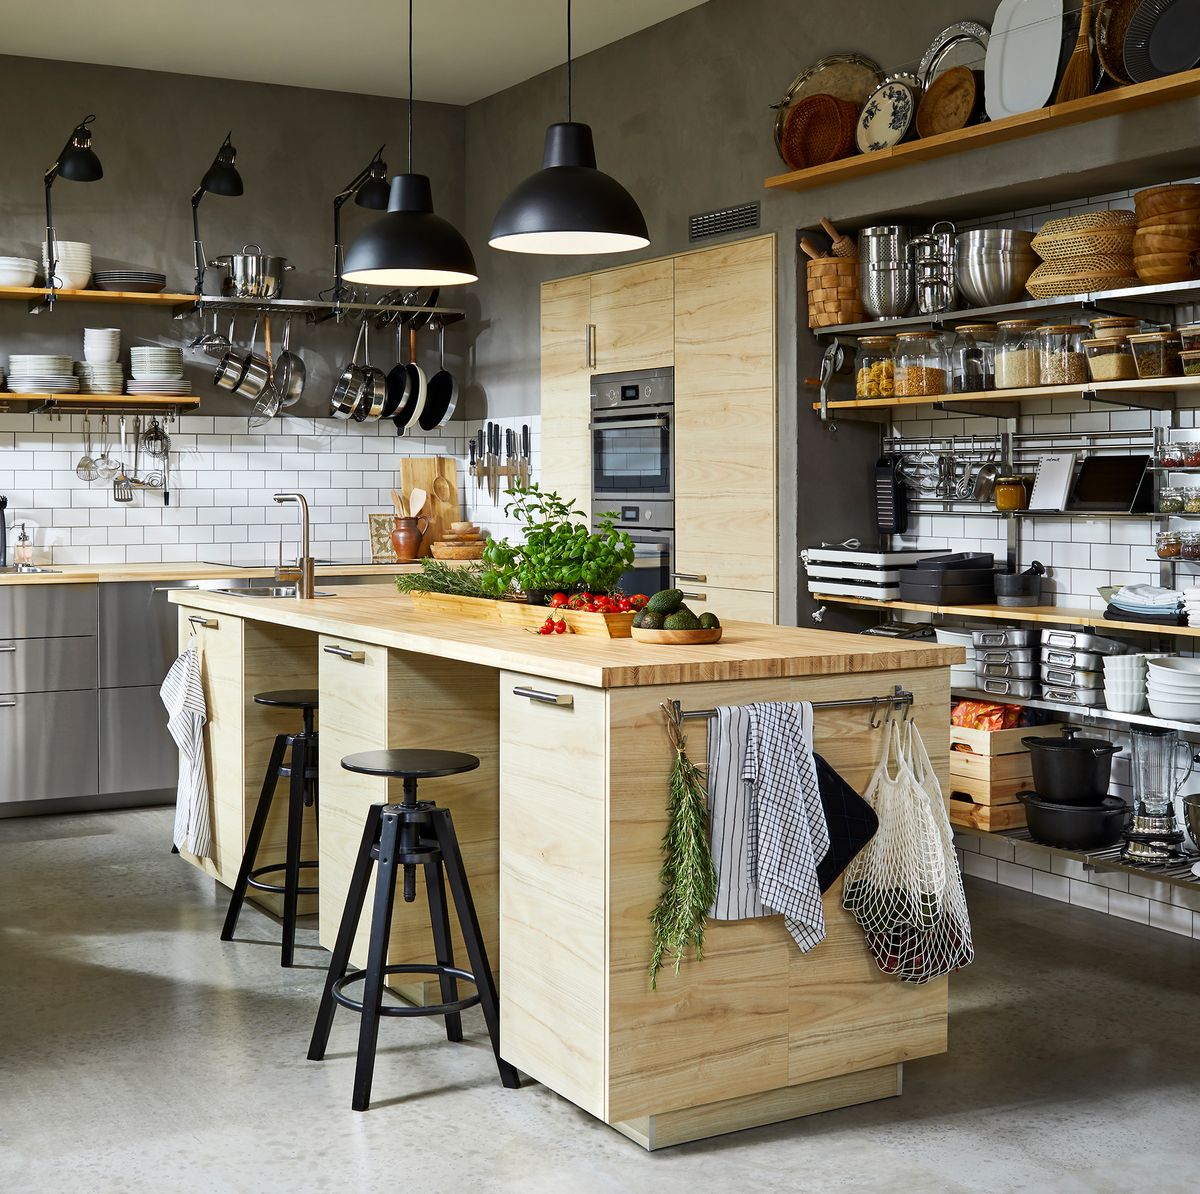 sabio carpeta sangrado Las 15 mejores tendencias de Ikea para renovar tu cocina